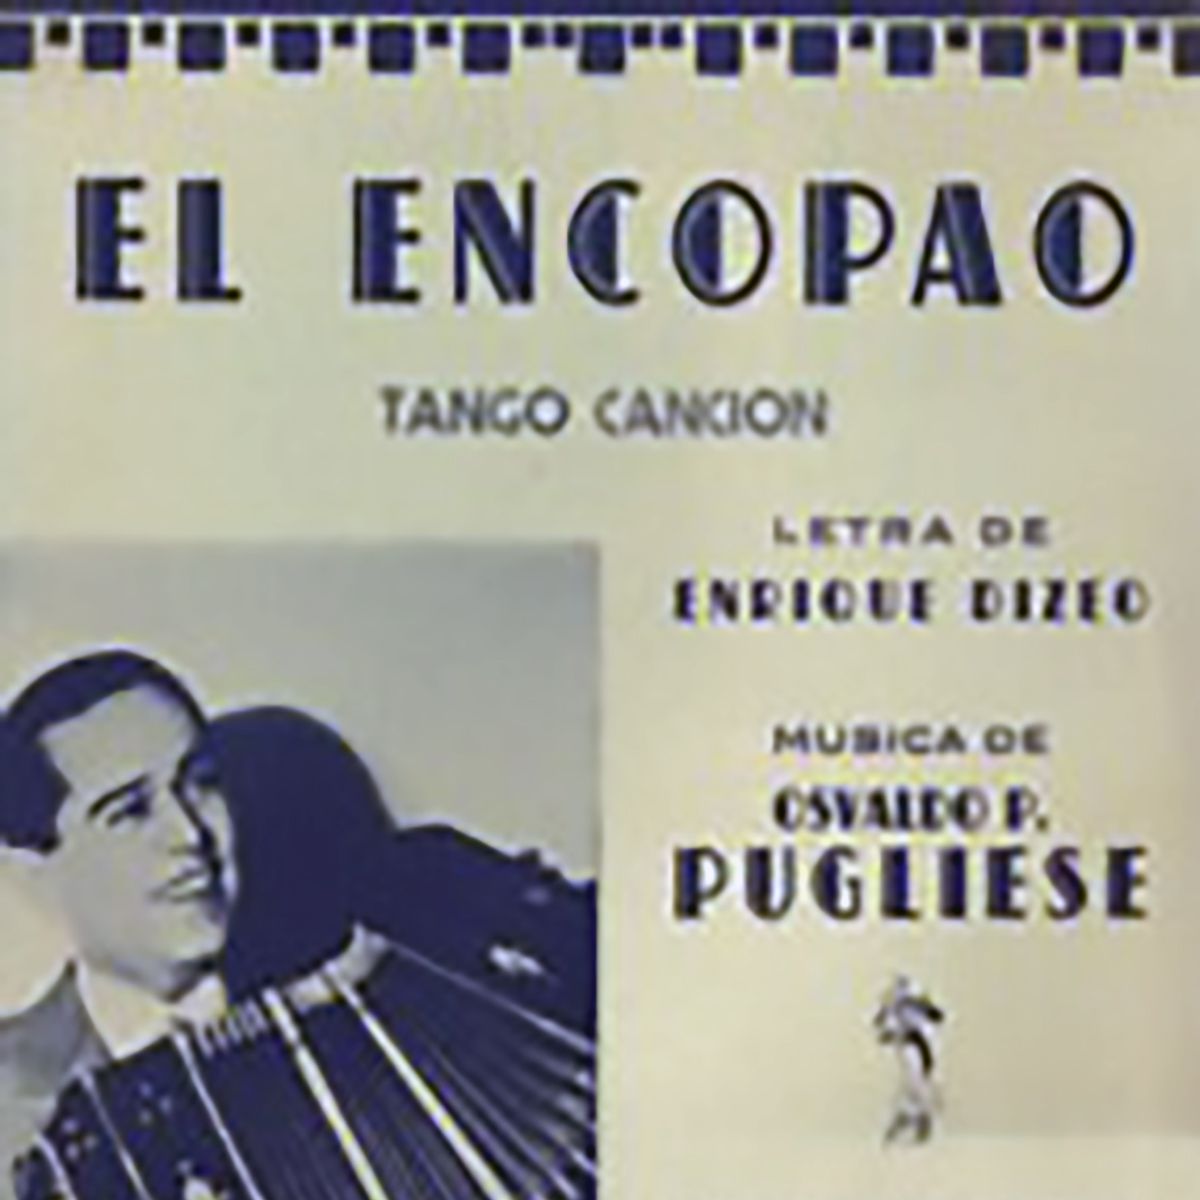 "El encopao", Argentine Tango music sheet cover